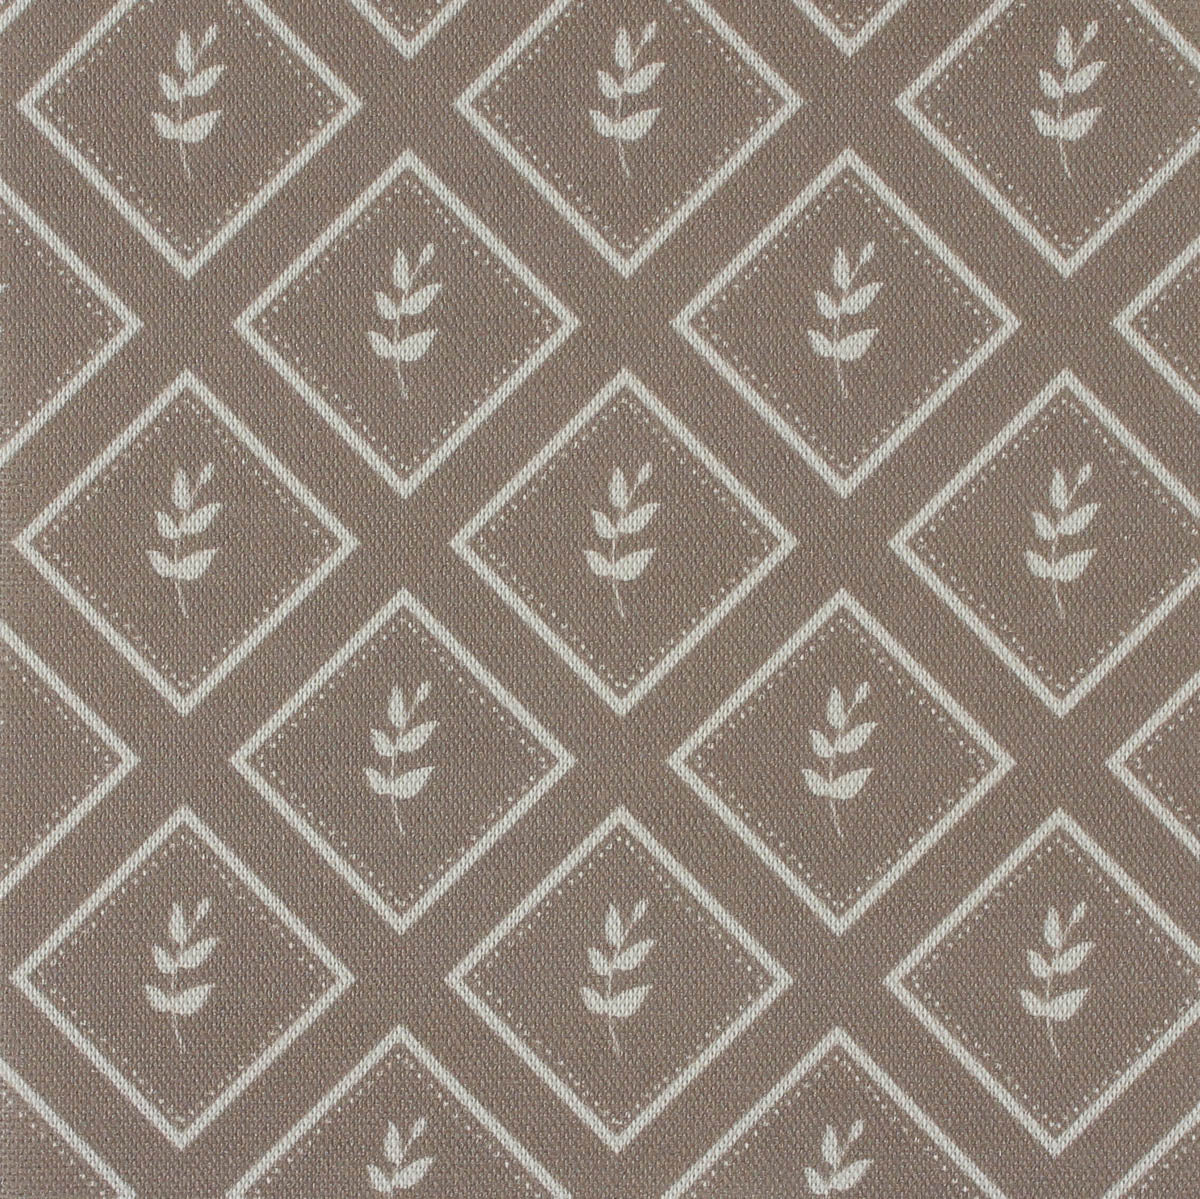 Little Leaf Reverse Fabric - Chateaux - Hydrangea Lane Home